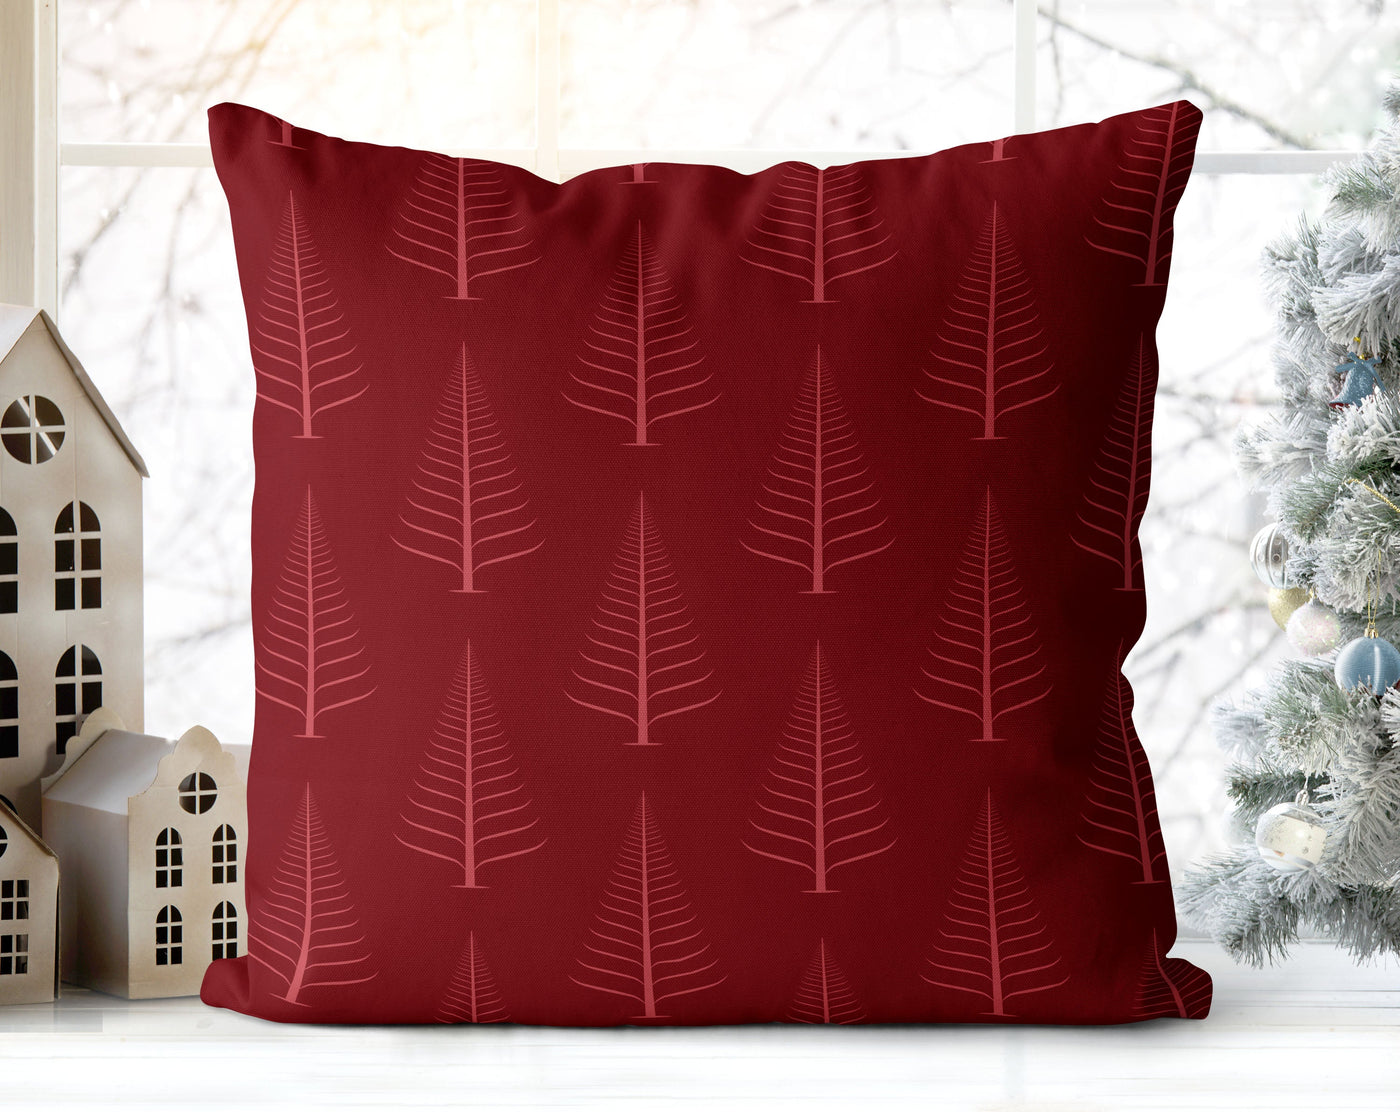 Gentle Winter Christmas Trees Scarlet Red Pillow Throw - Cush Potato Pillows